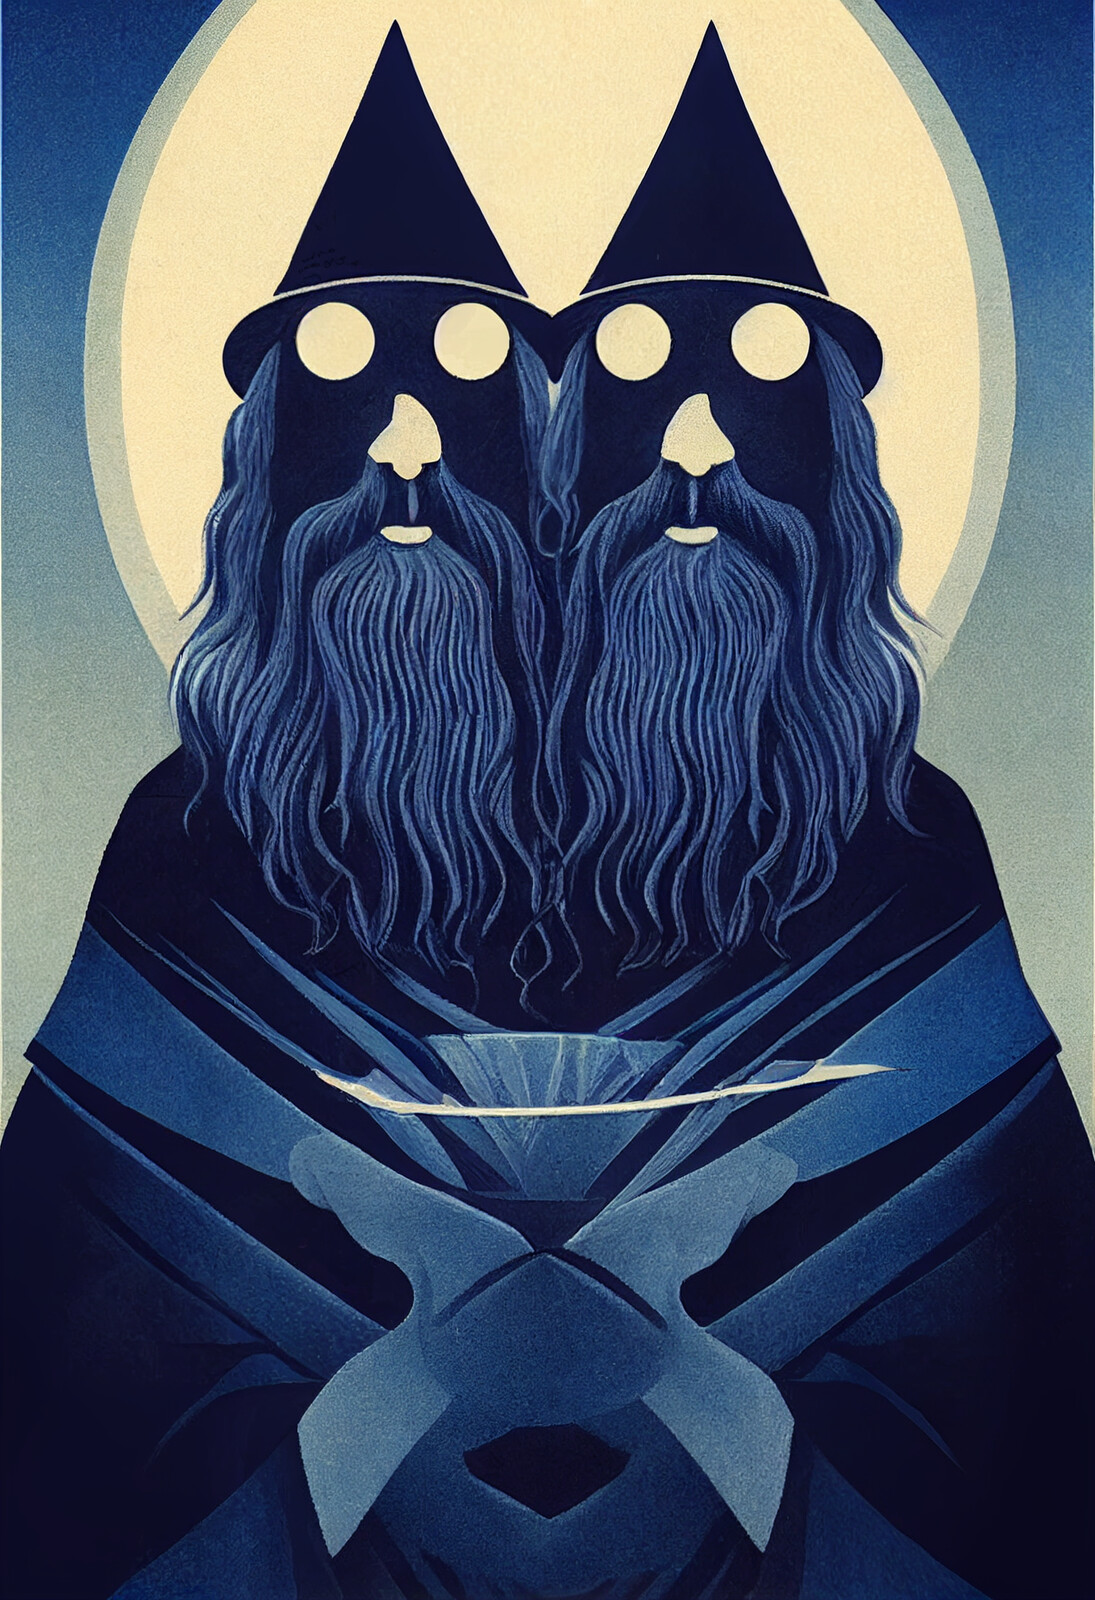 The Blue Wizards: Pallando and Alatar